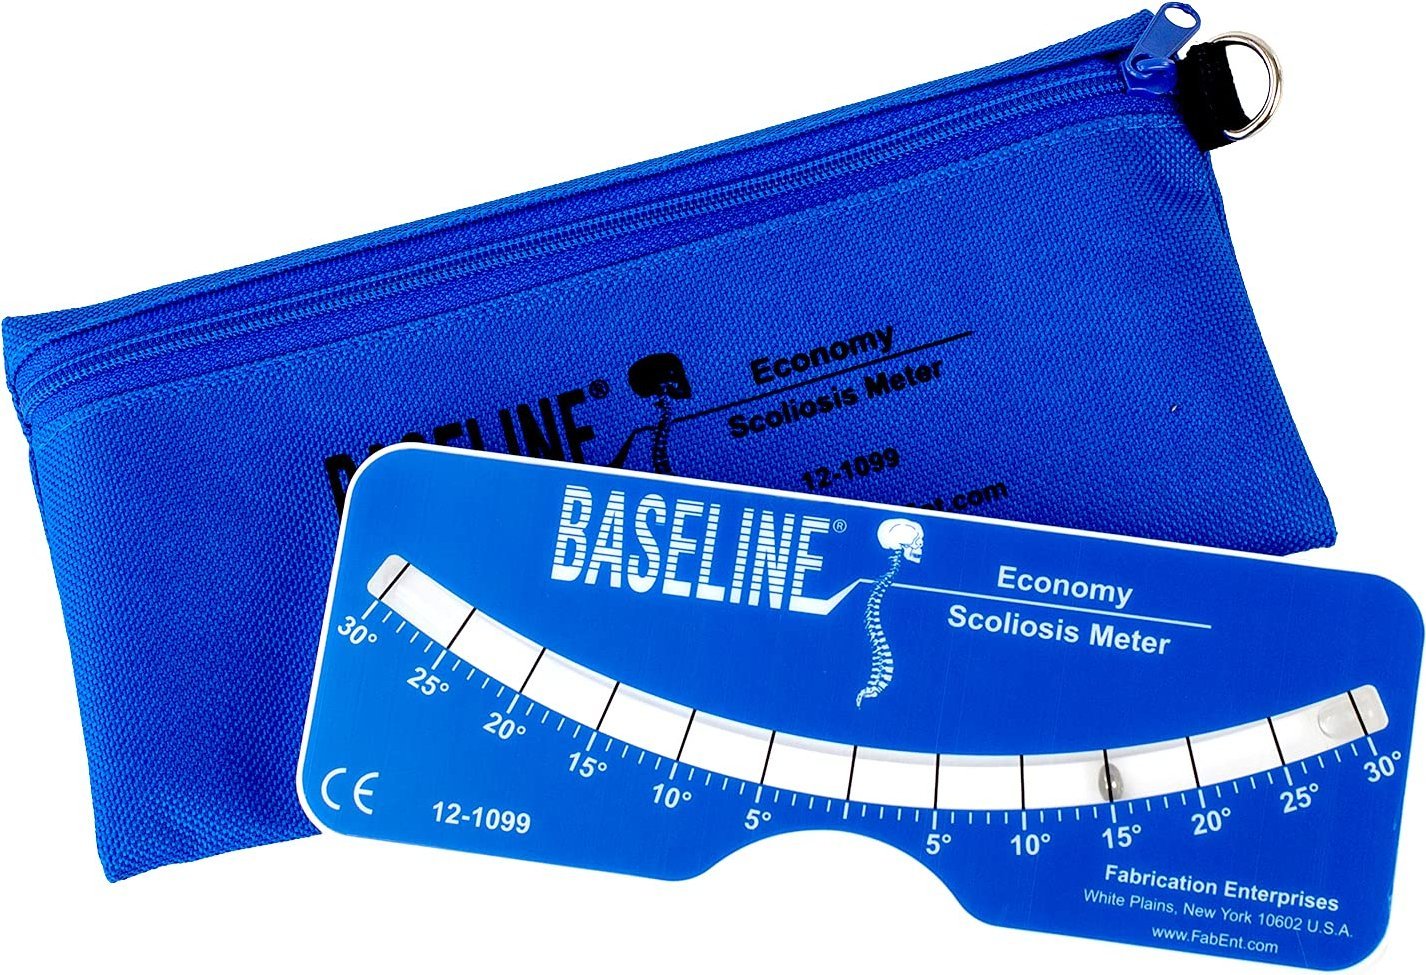 Scoliometer Baseline